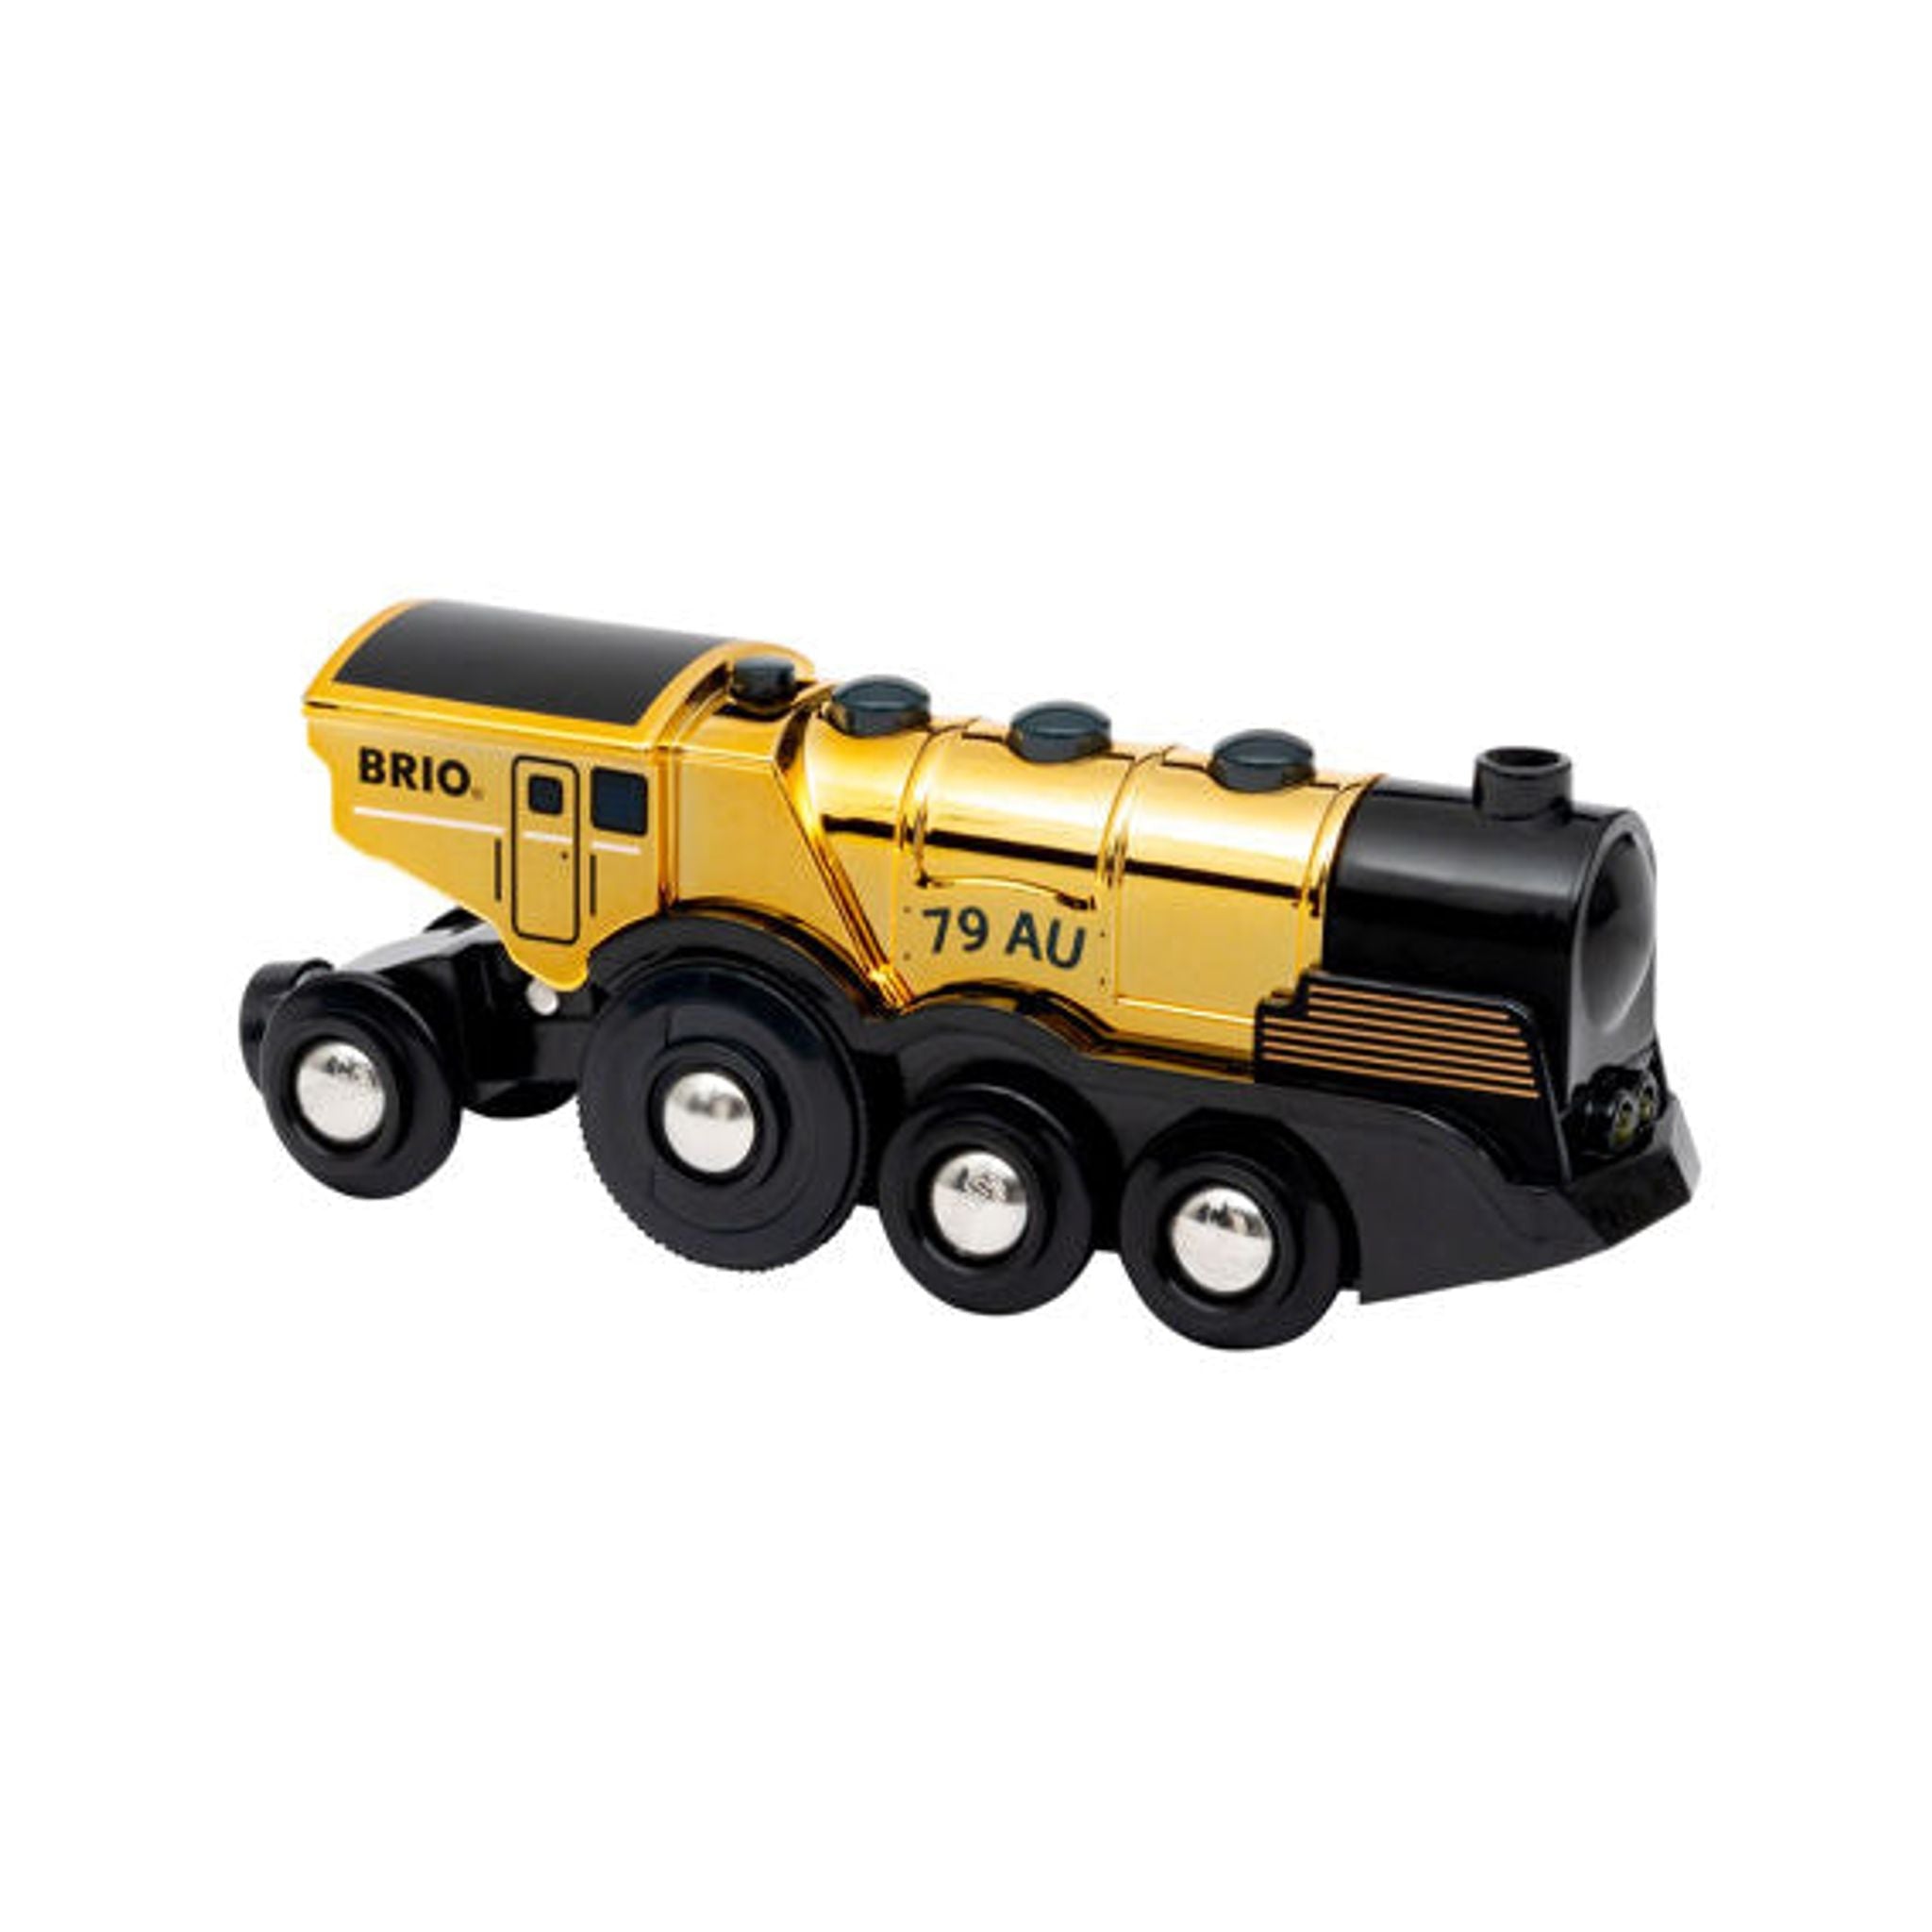 BRIO - Mighty Gold Action Locomotive - Toybox Tales